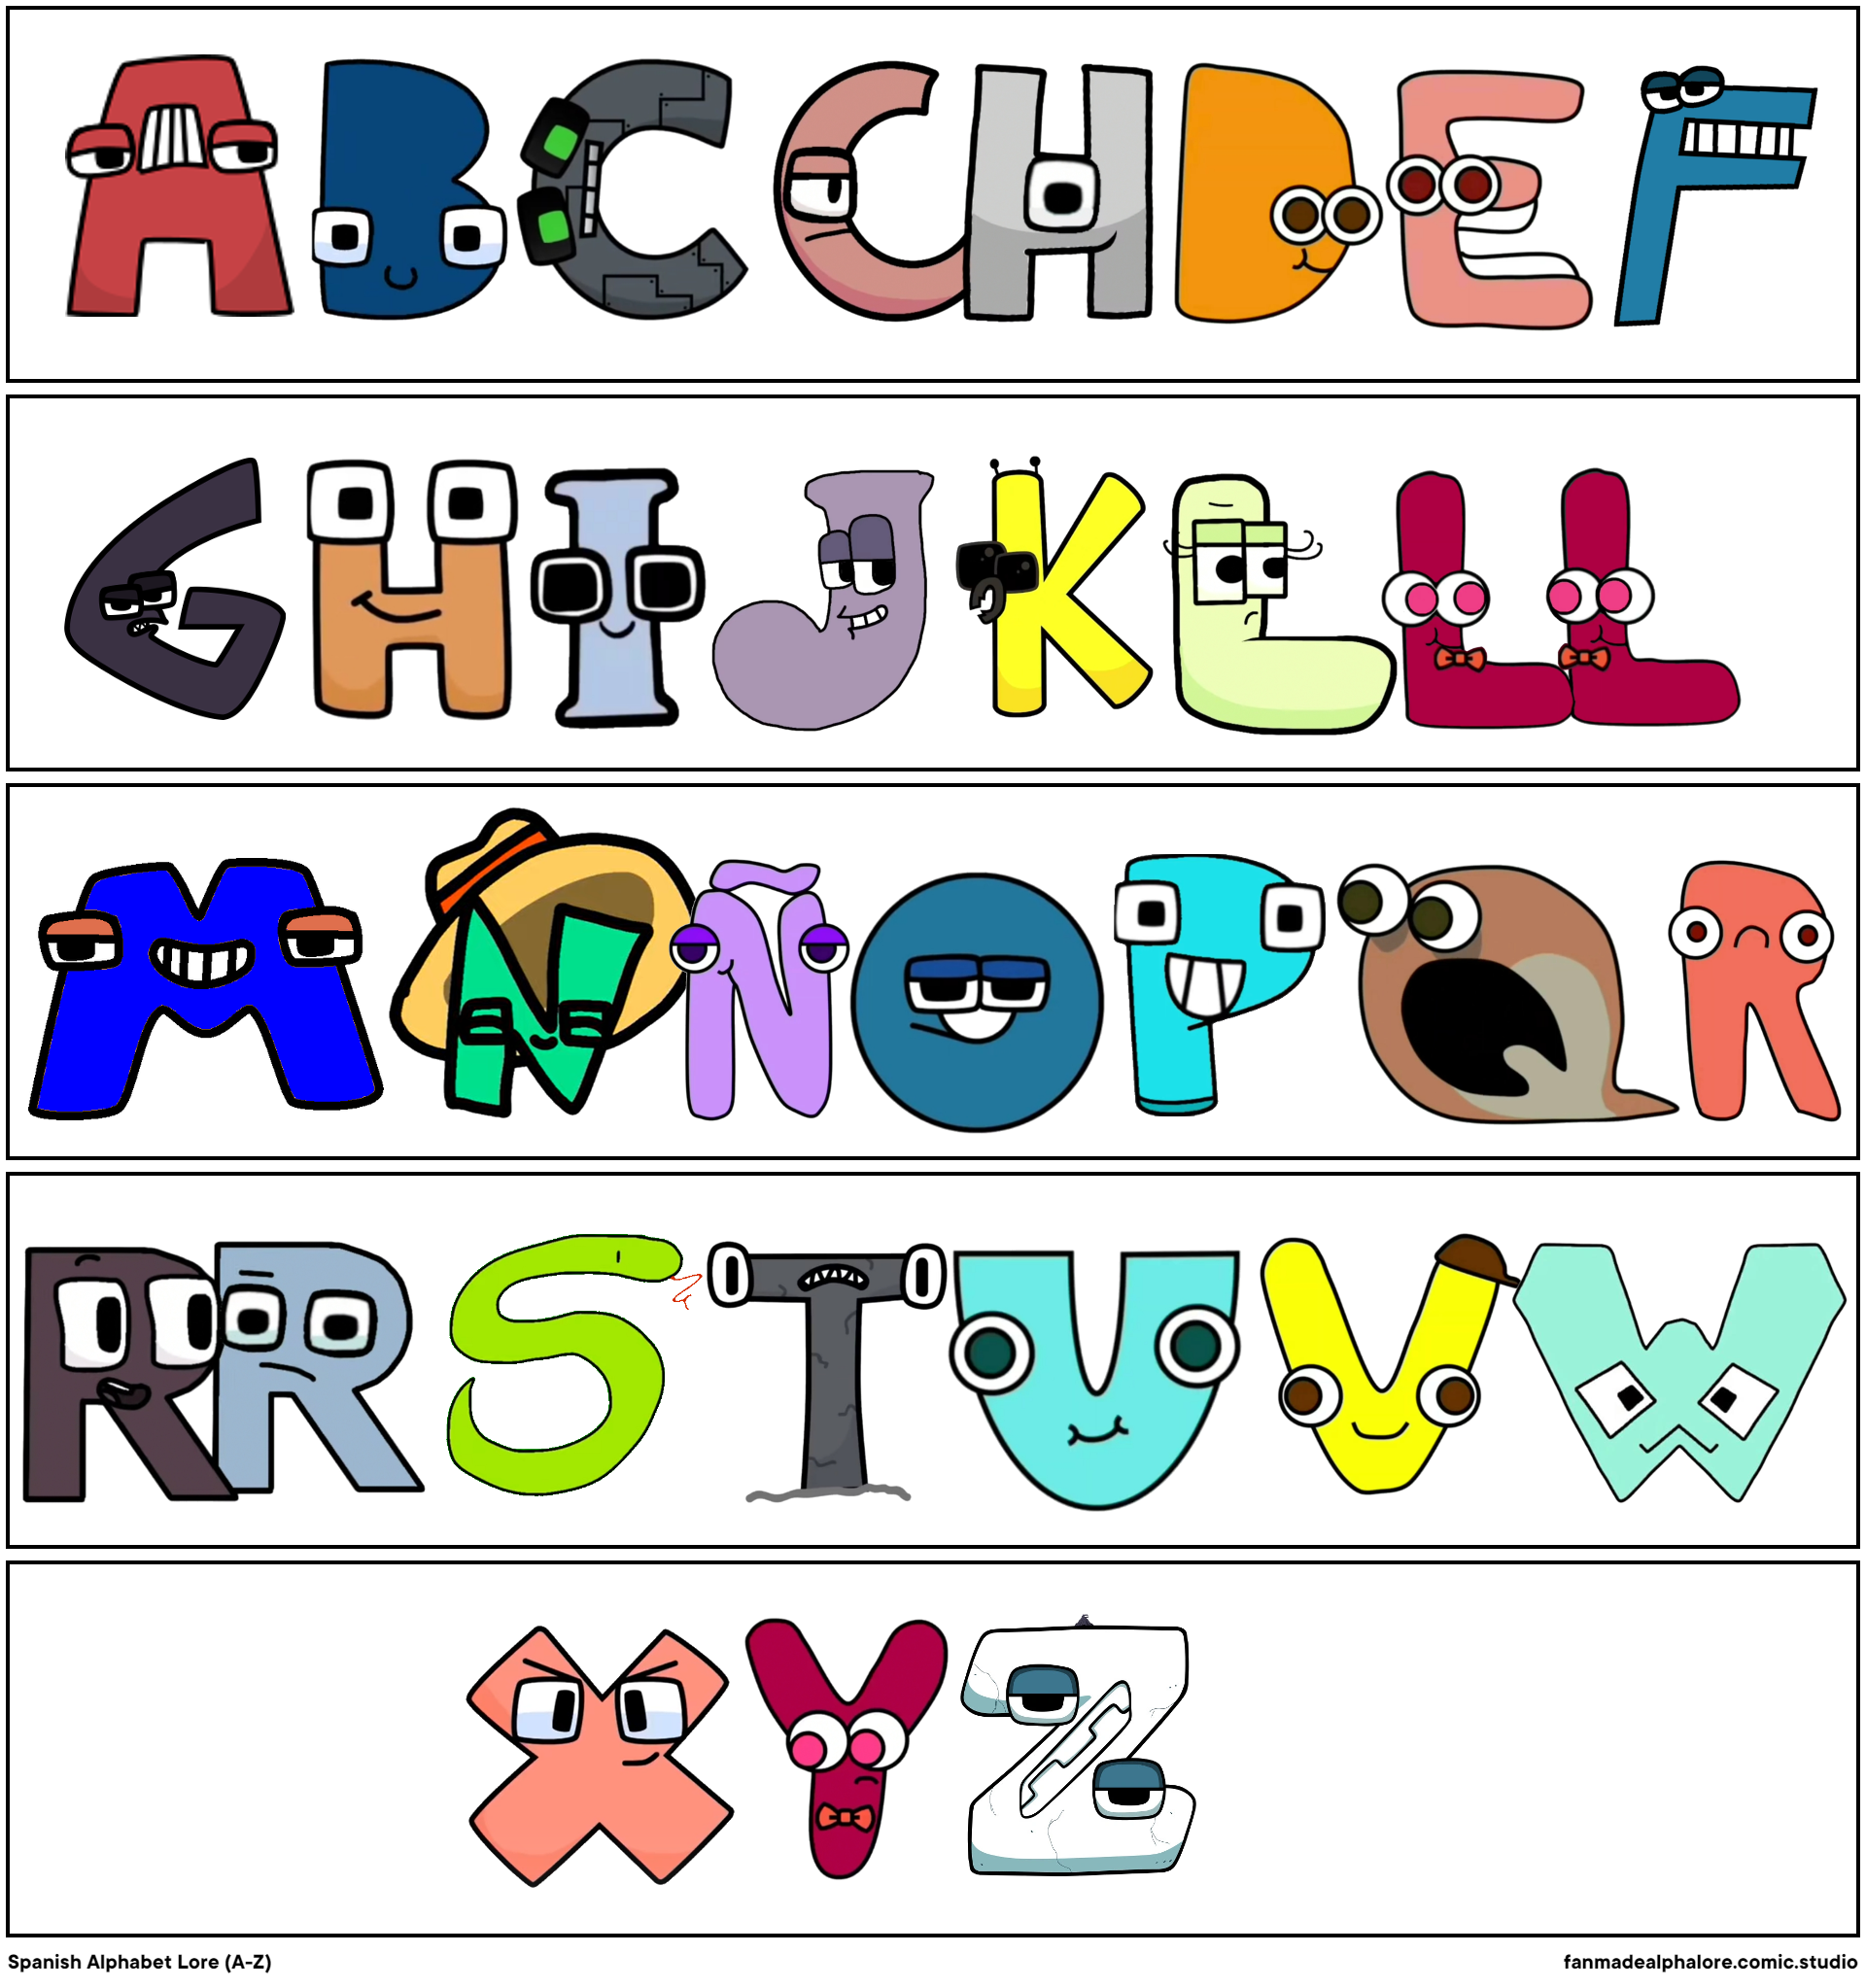 Alphabet Lore A-Z